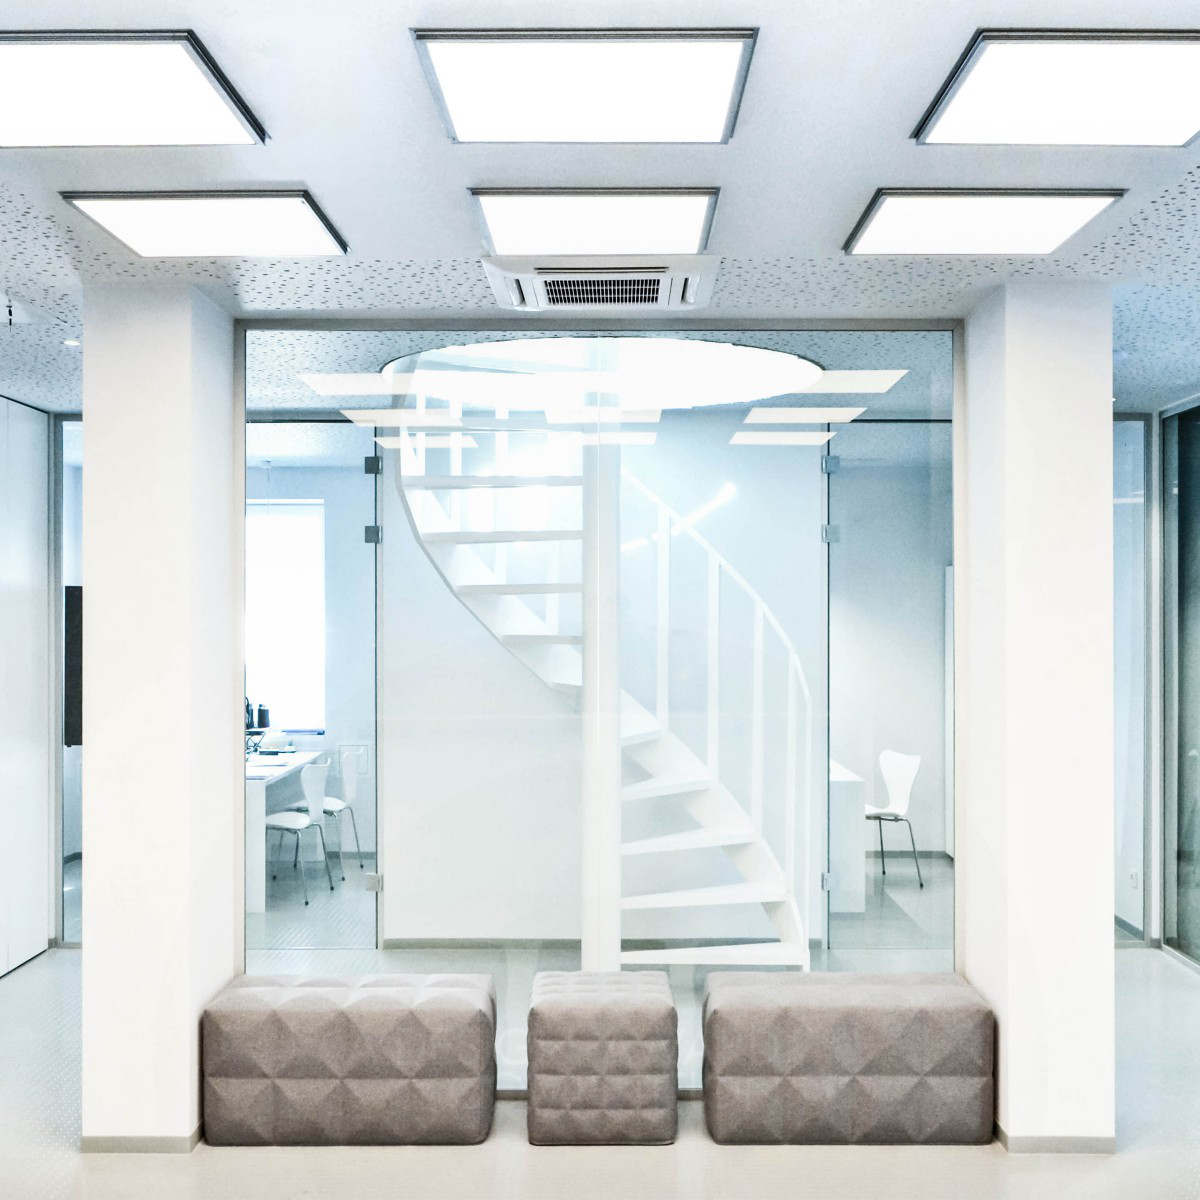 Iridato Office Design of interior space by Vadim Kondrashev